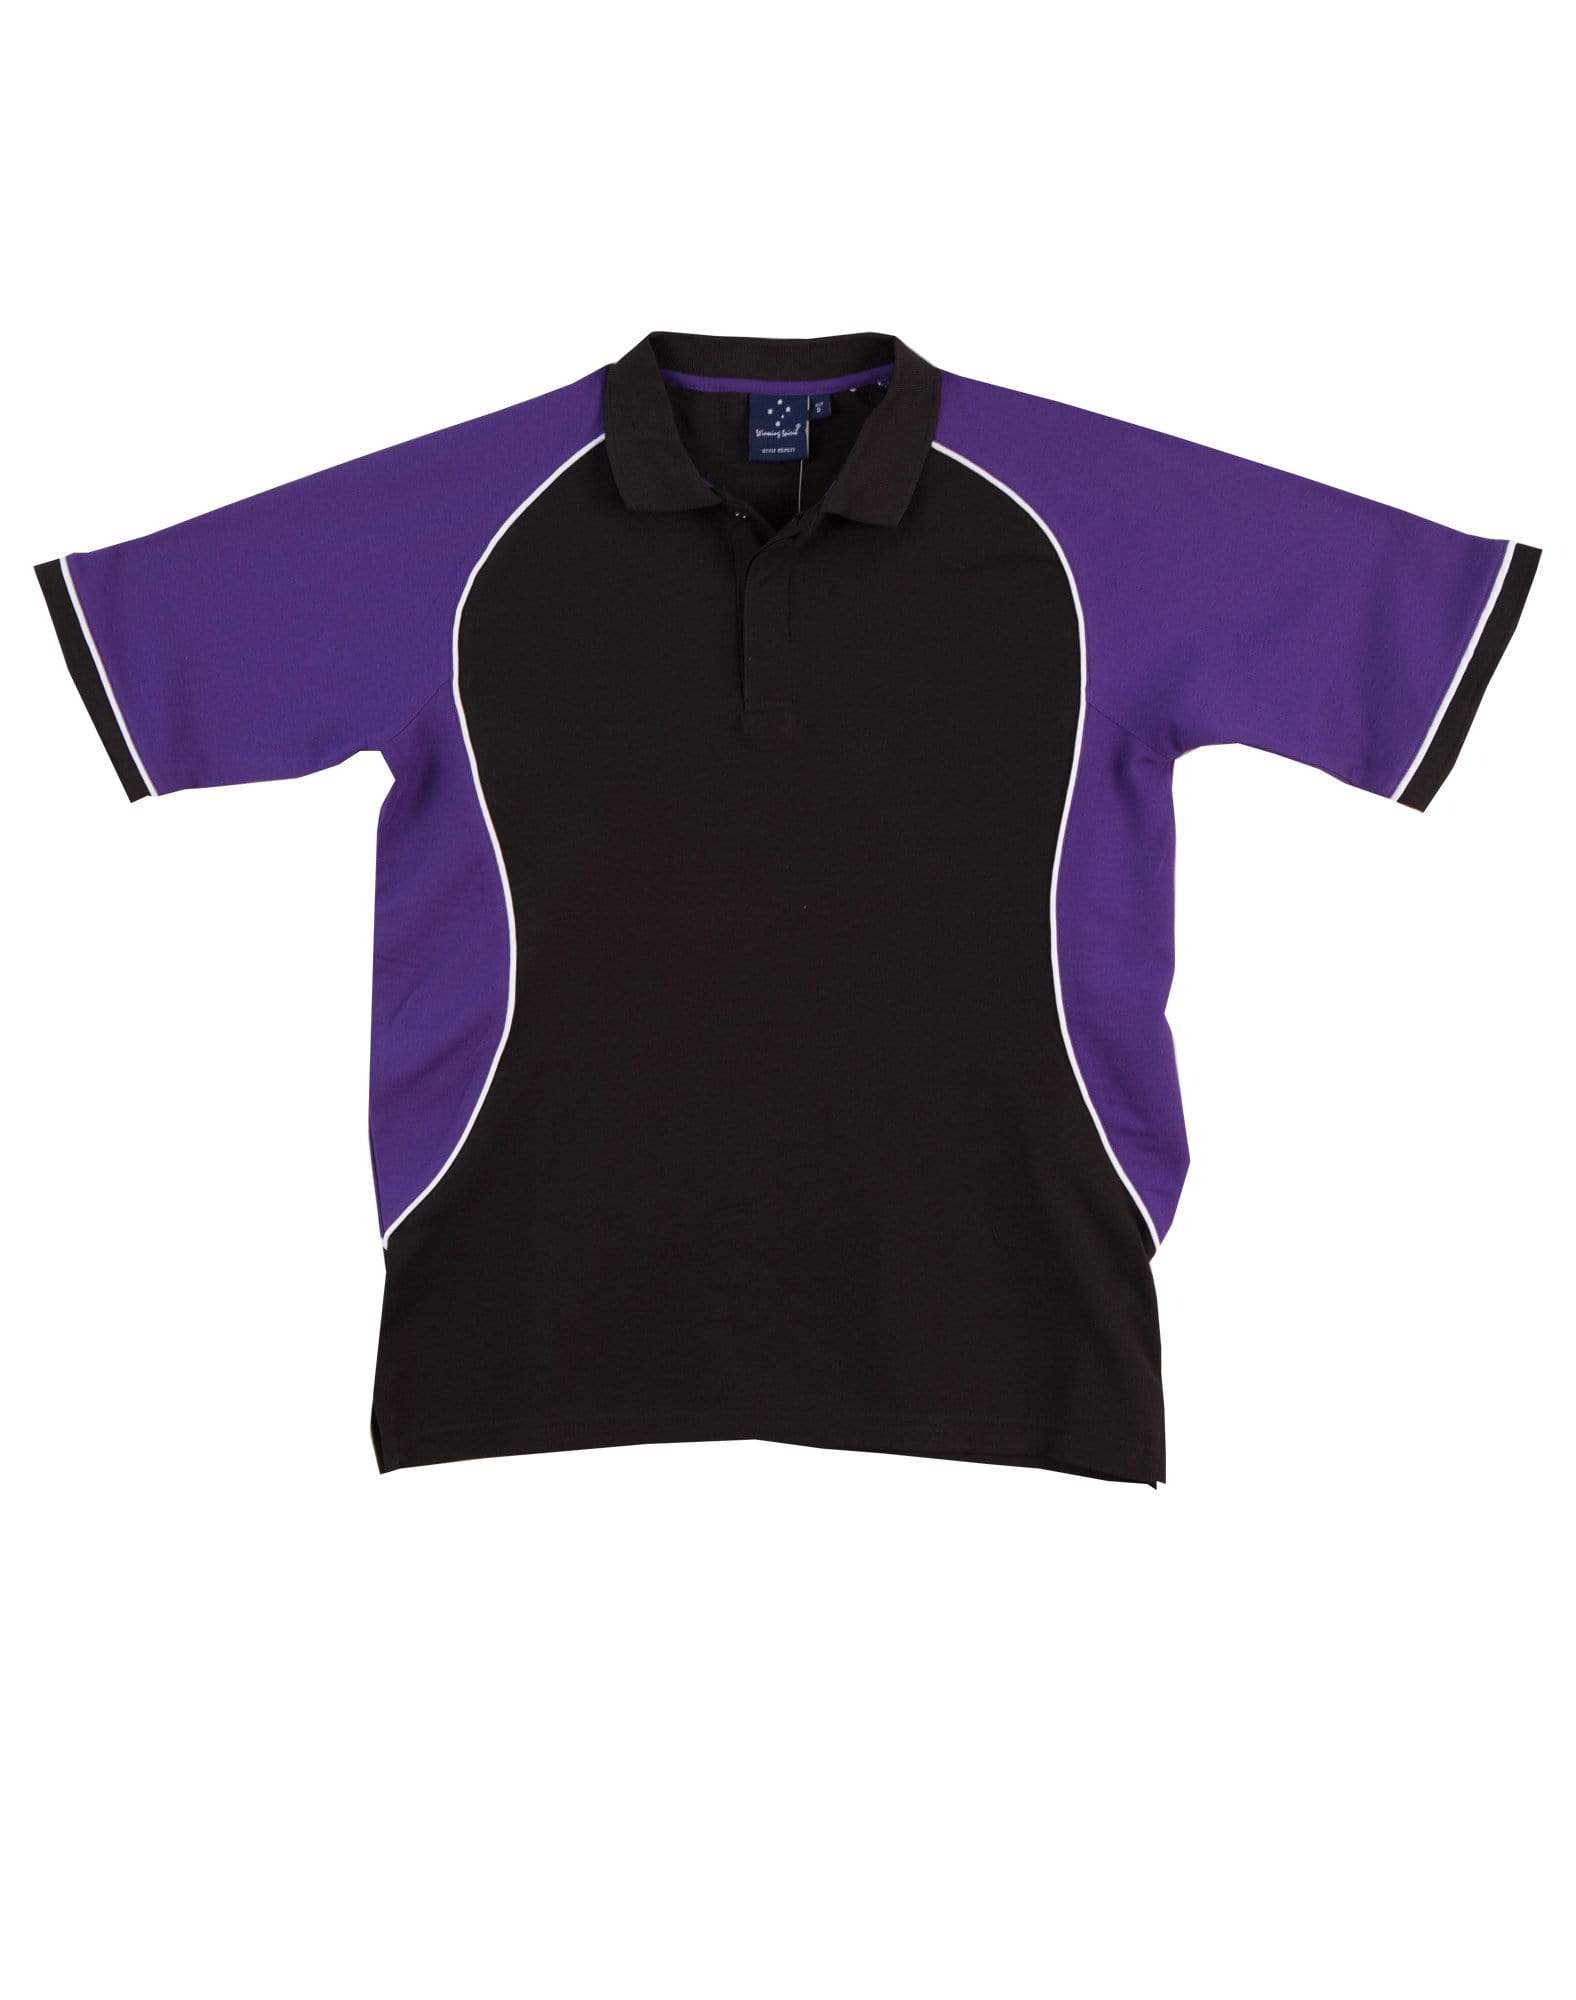 Winning Spirit Arena Polo Shirt Women's Ps78 Casual Wear Winning Spirit Black/White/Purple 8 